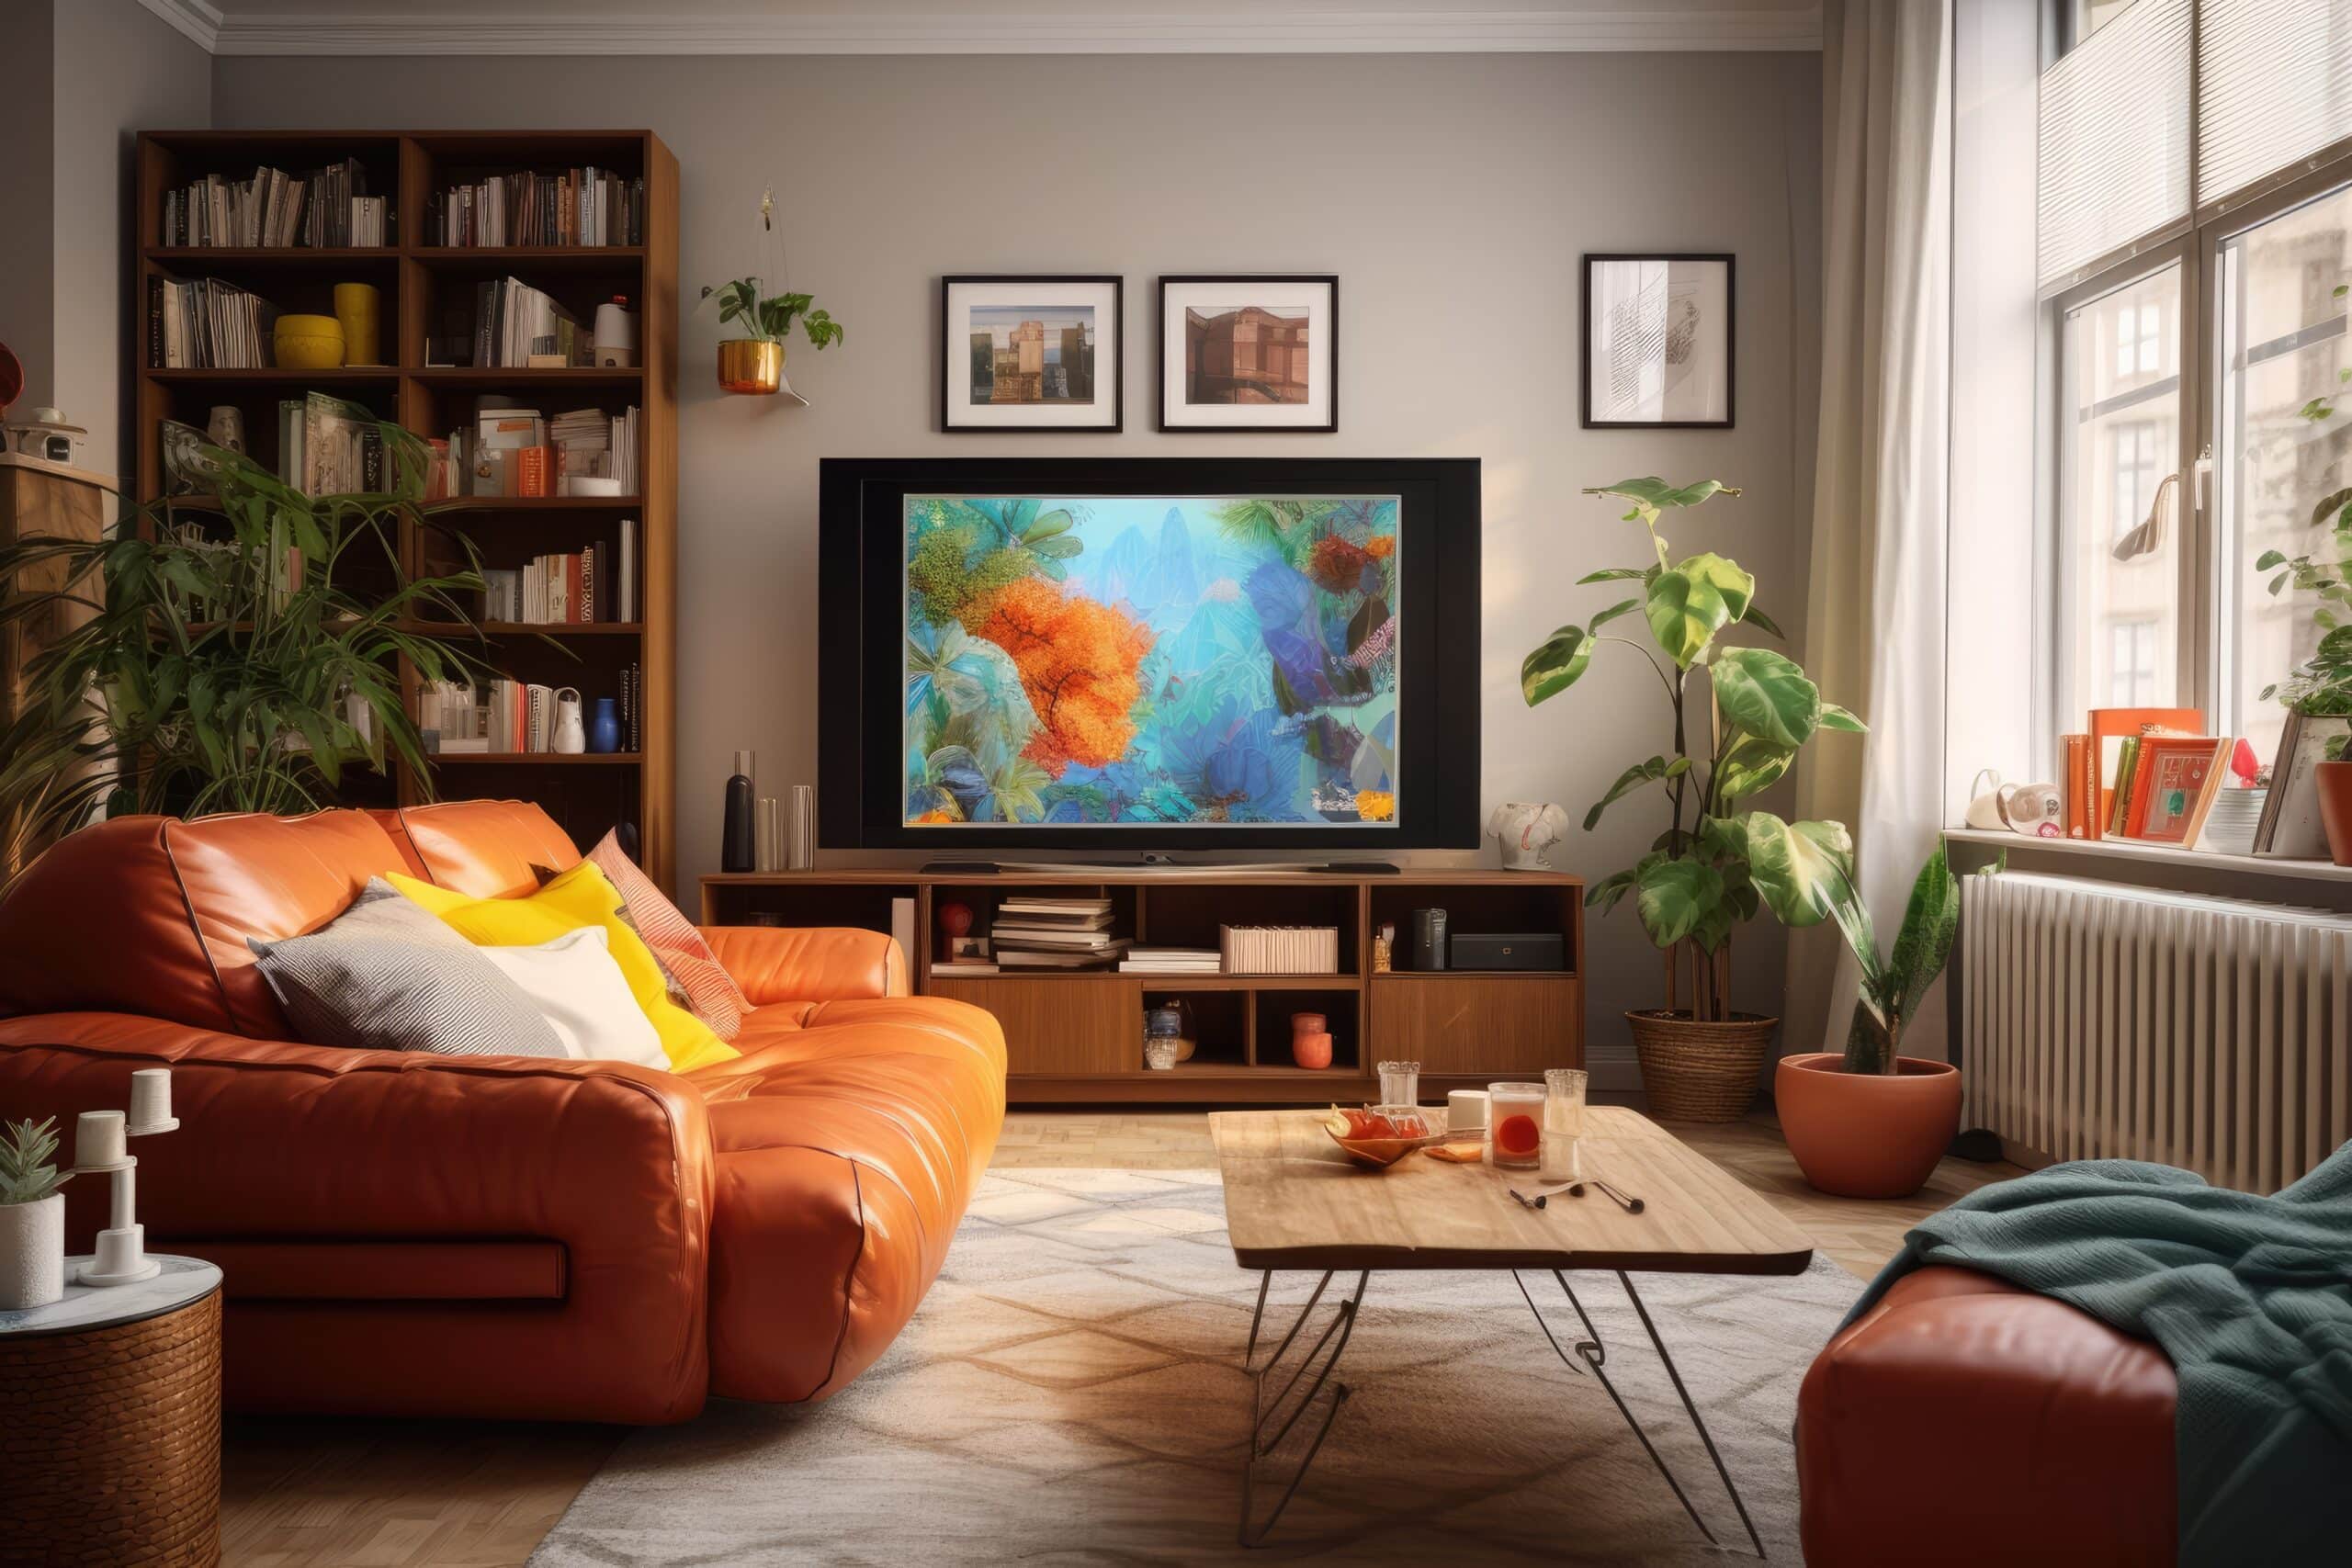 www.appr.com : How To Connect Alexa To Samsung Smart TV?